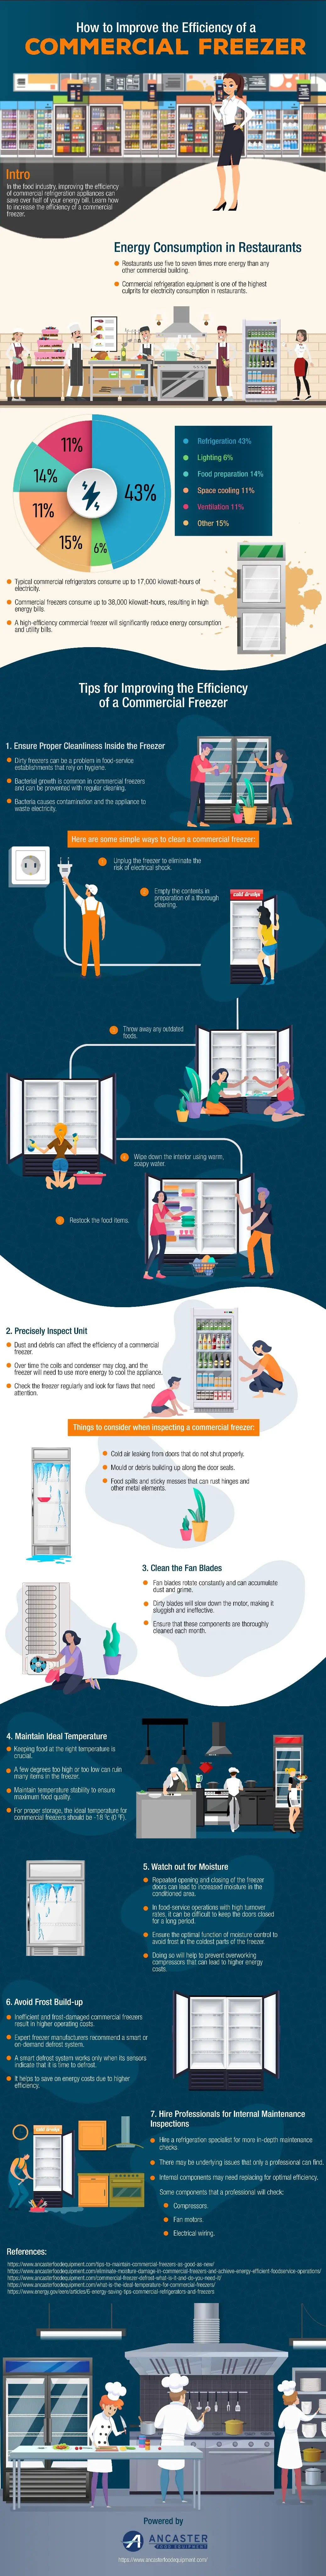 improve_efficiency_of_commercial_freezer_-_infographic-min.jpg